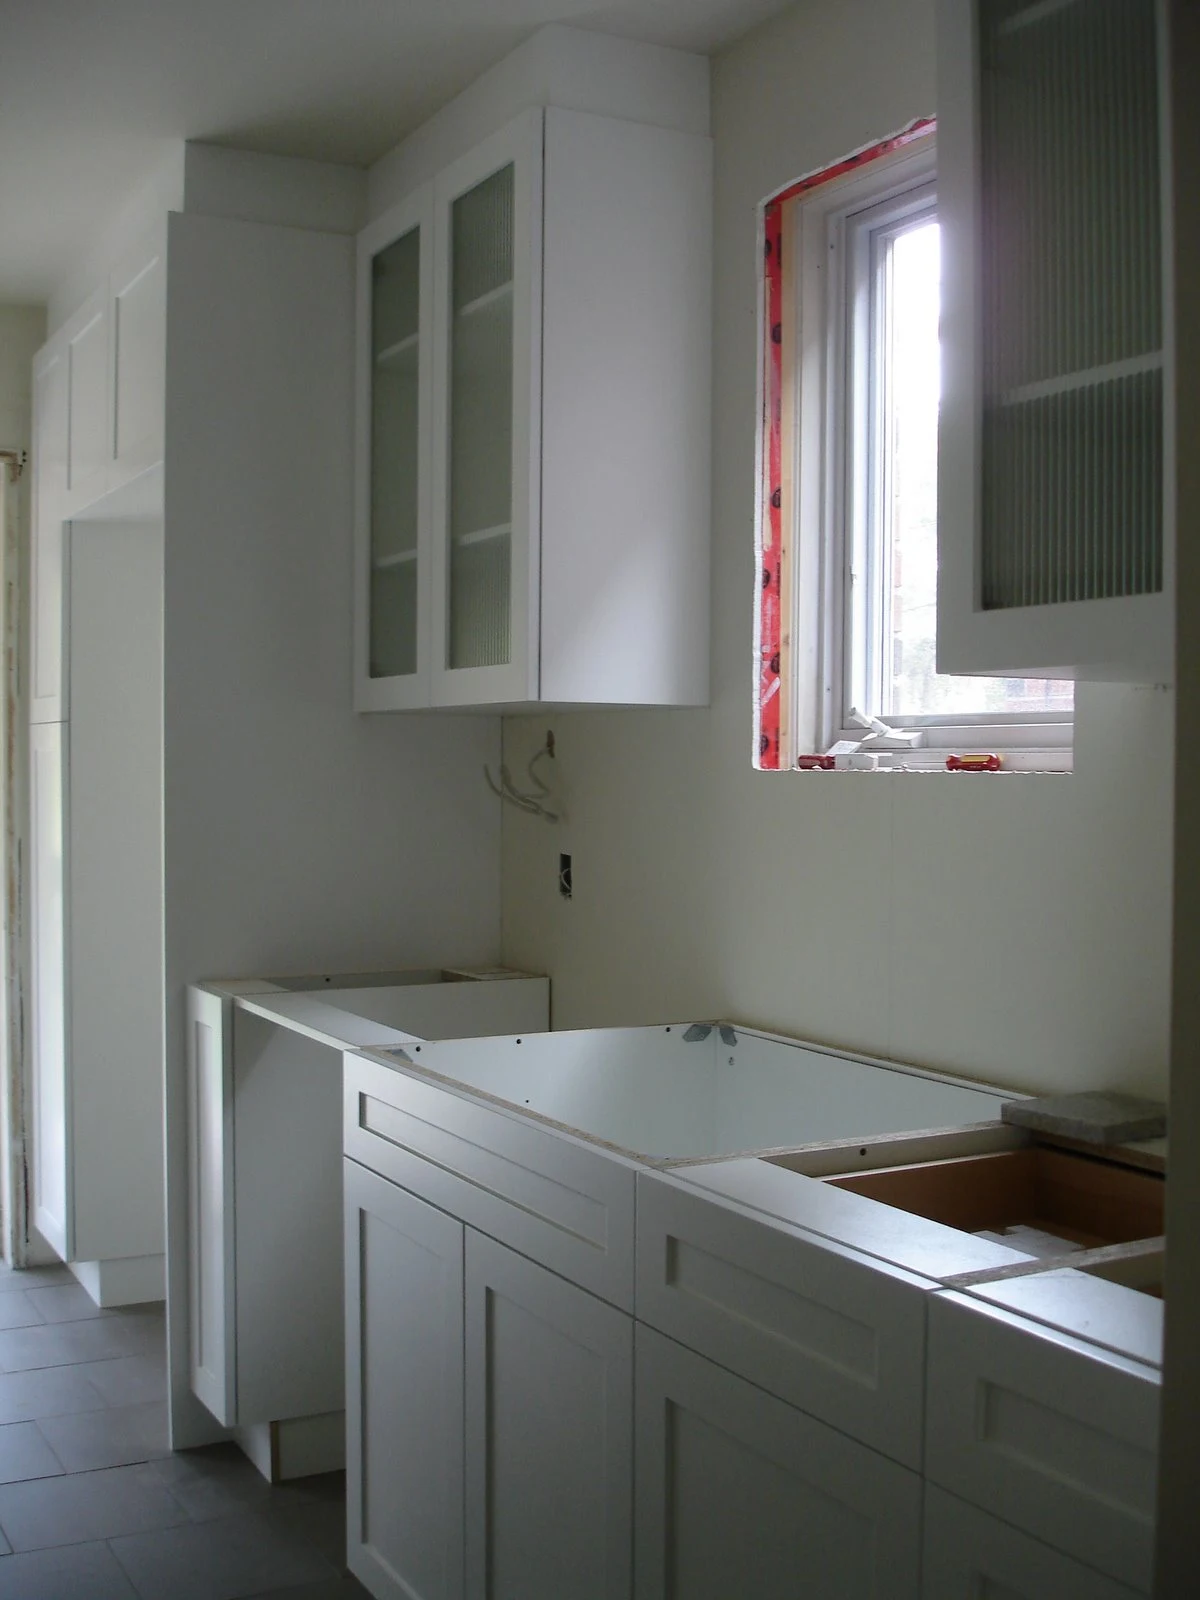 diy kitchen renovation, kitchen cabinetry, aya kitchen cabinets